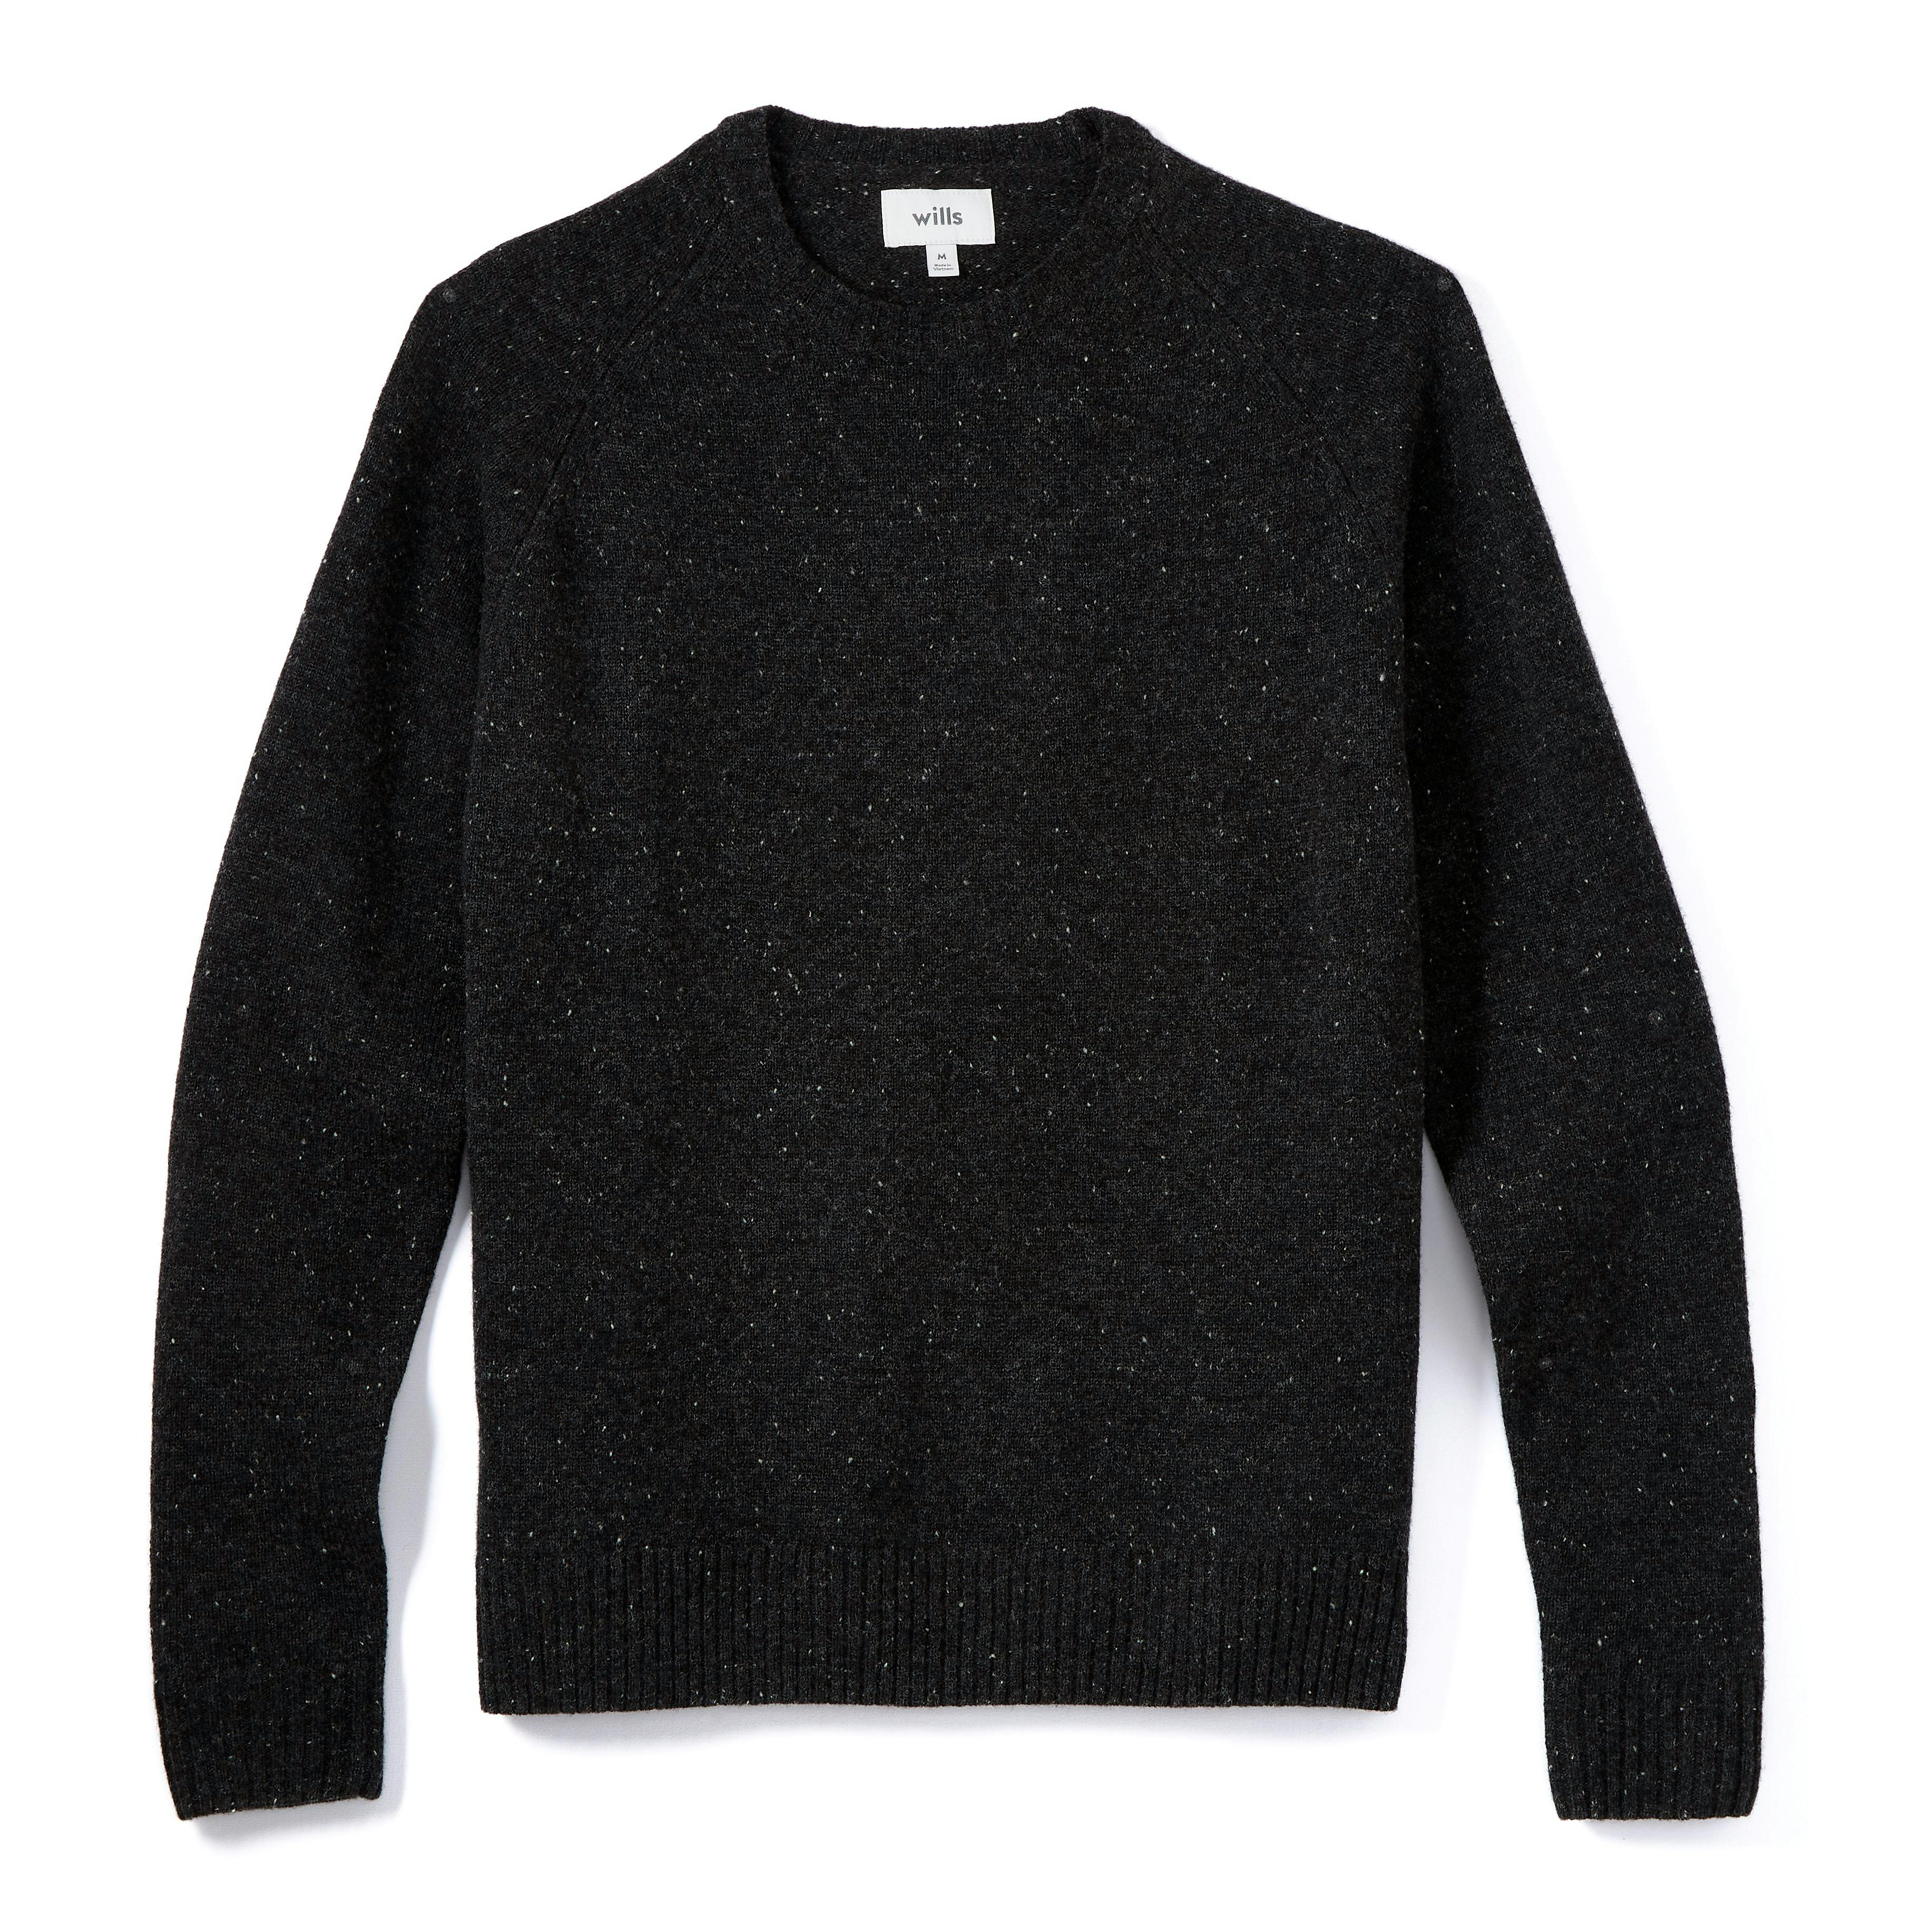 Speckled Merino Wool Crewneck Sweater